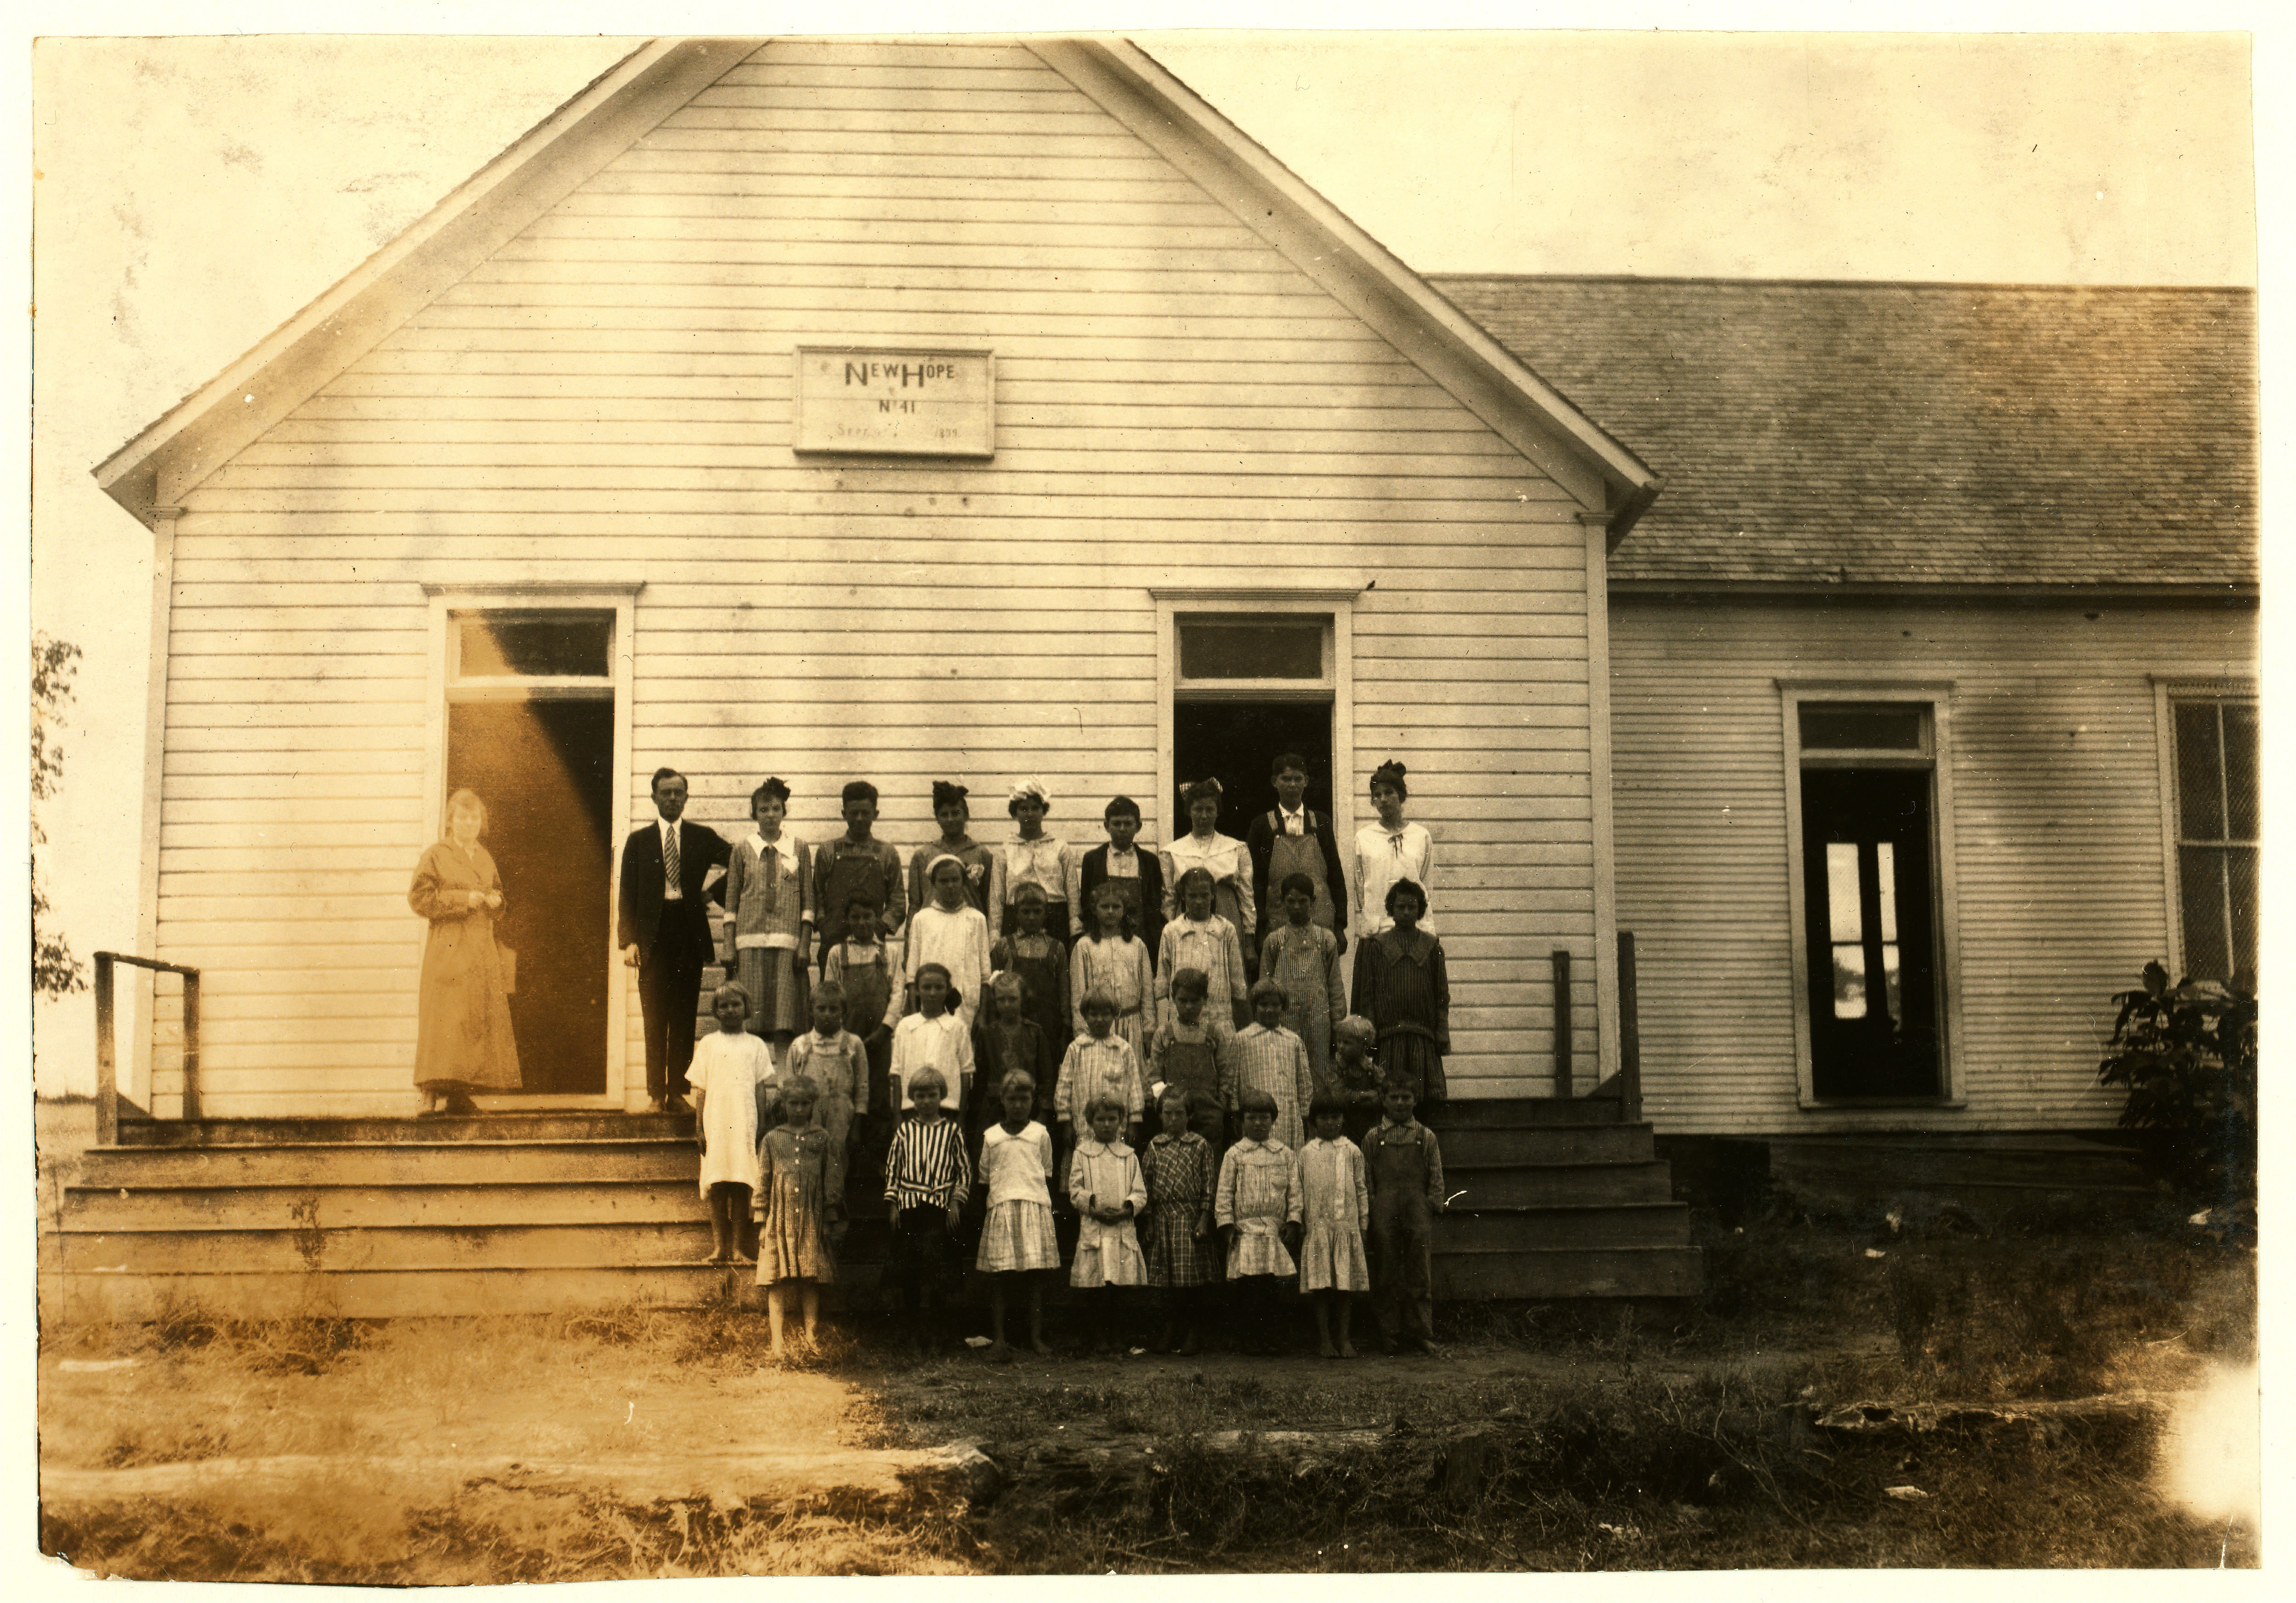 Lewis Hine, New Hope School no. 41, Pottawotamie County, Oklahoma, 1916